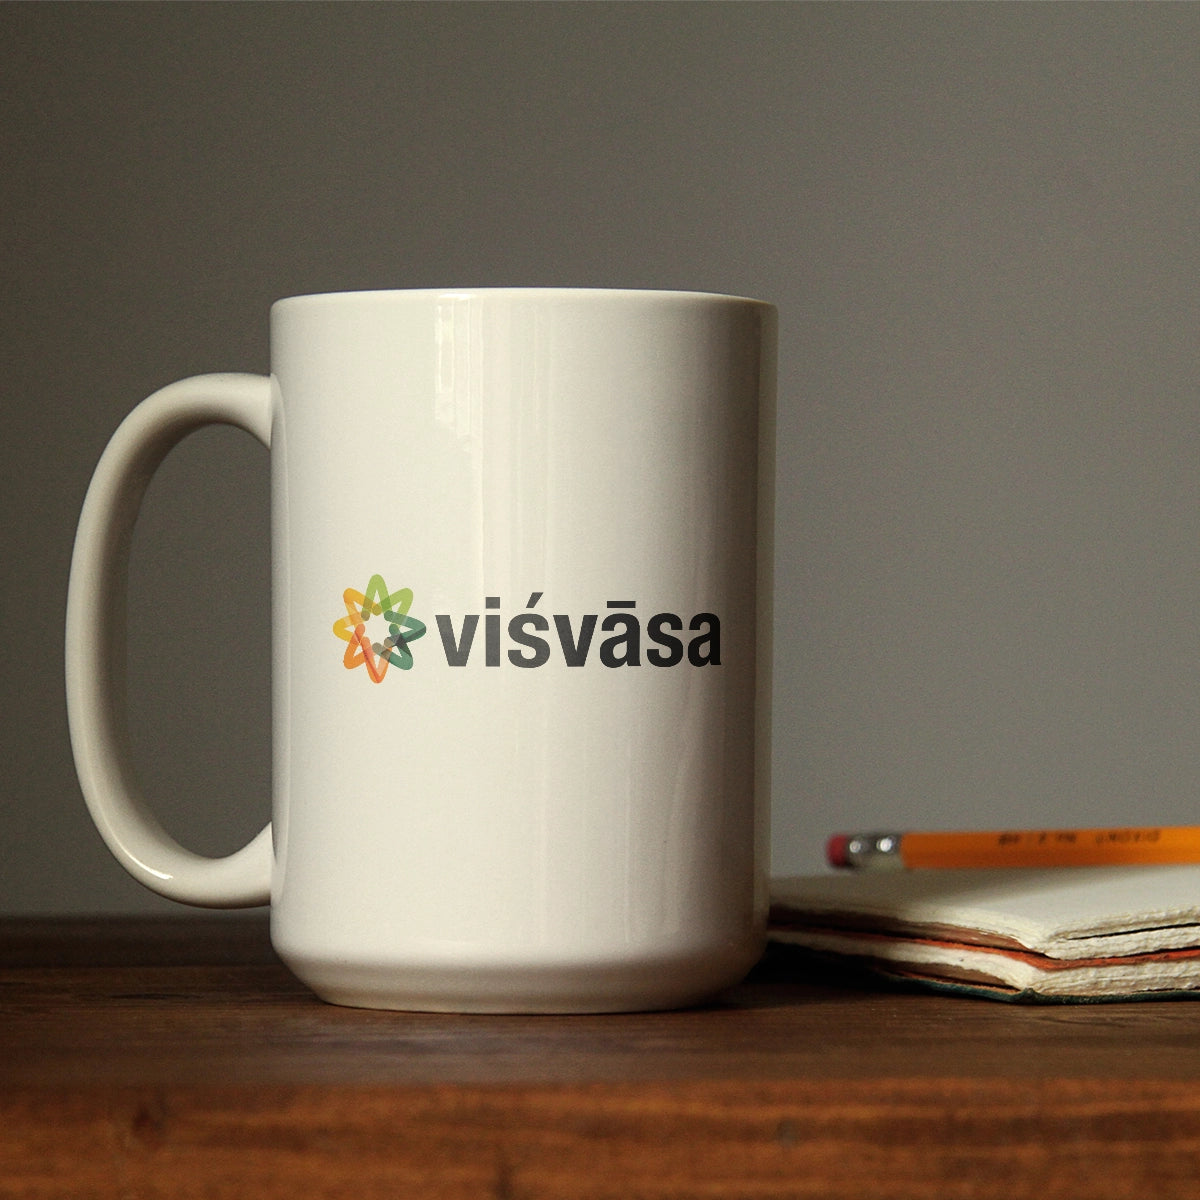 visvasa.com